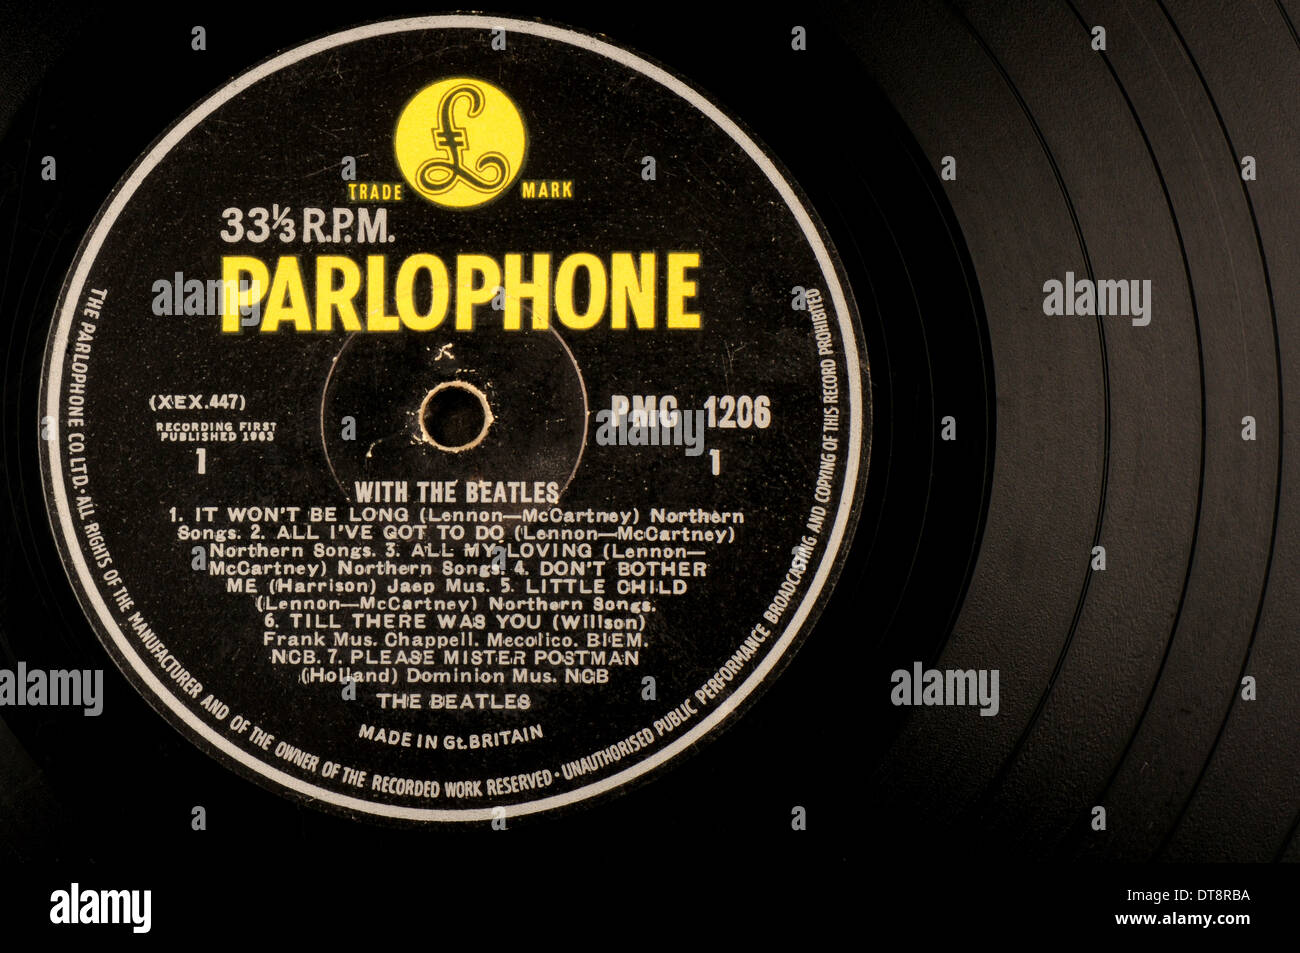 Original Beatles album with Parlophone label Stock Photo